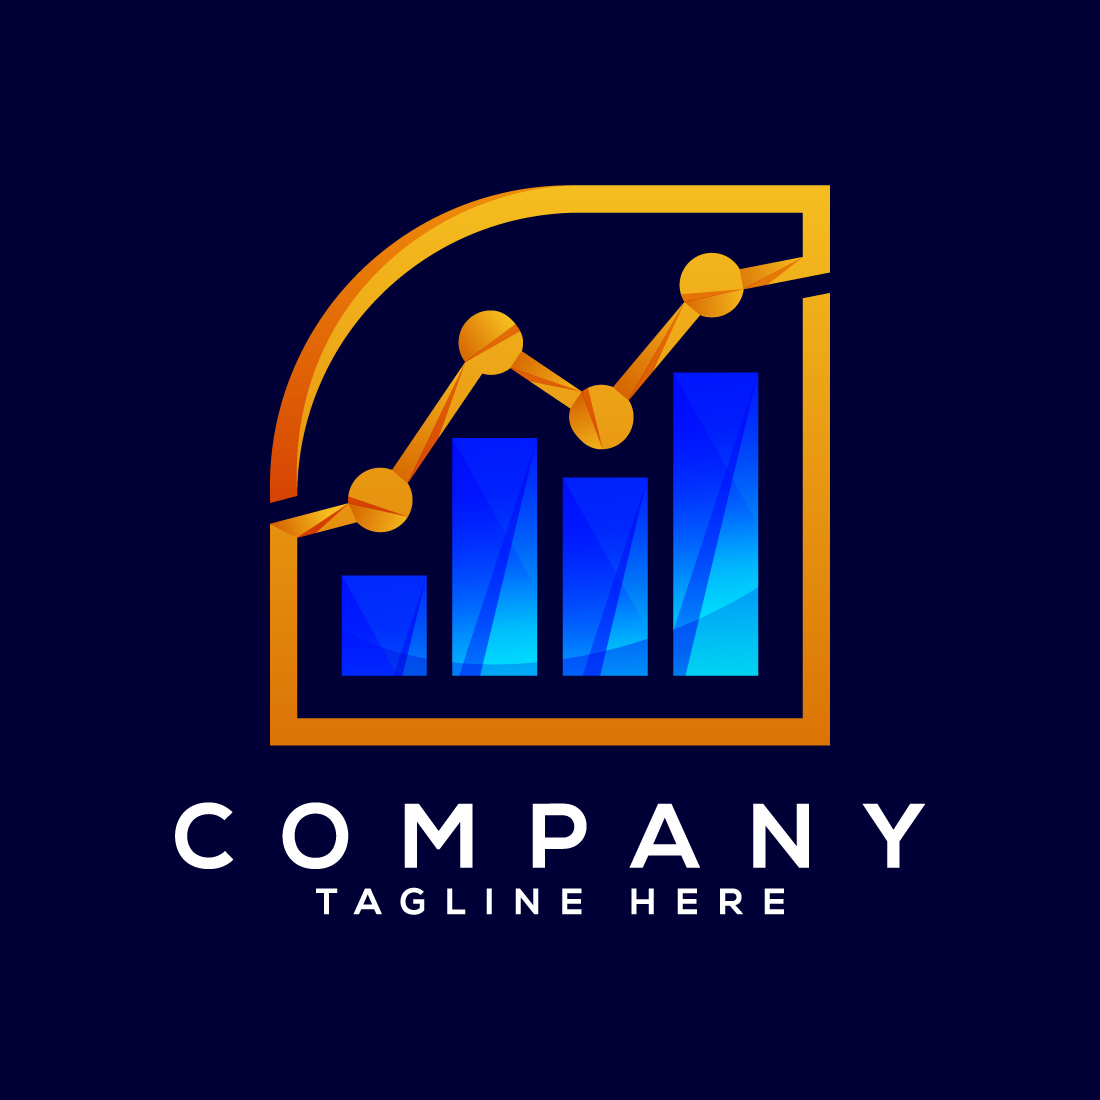 Accounting financial gradient logo, Financial Advisors logo design vector cover image.